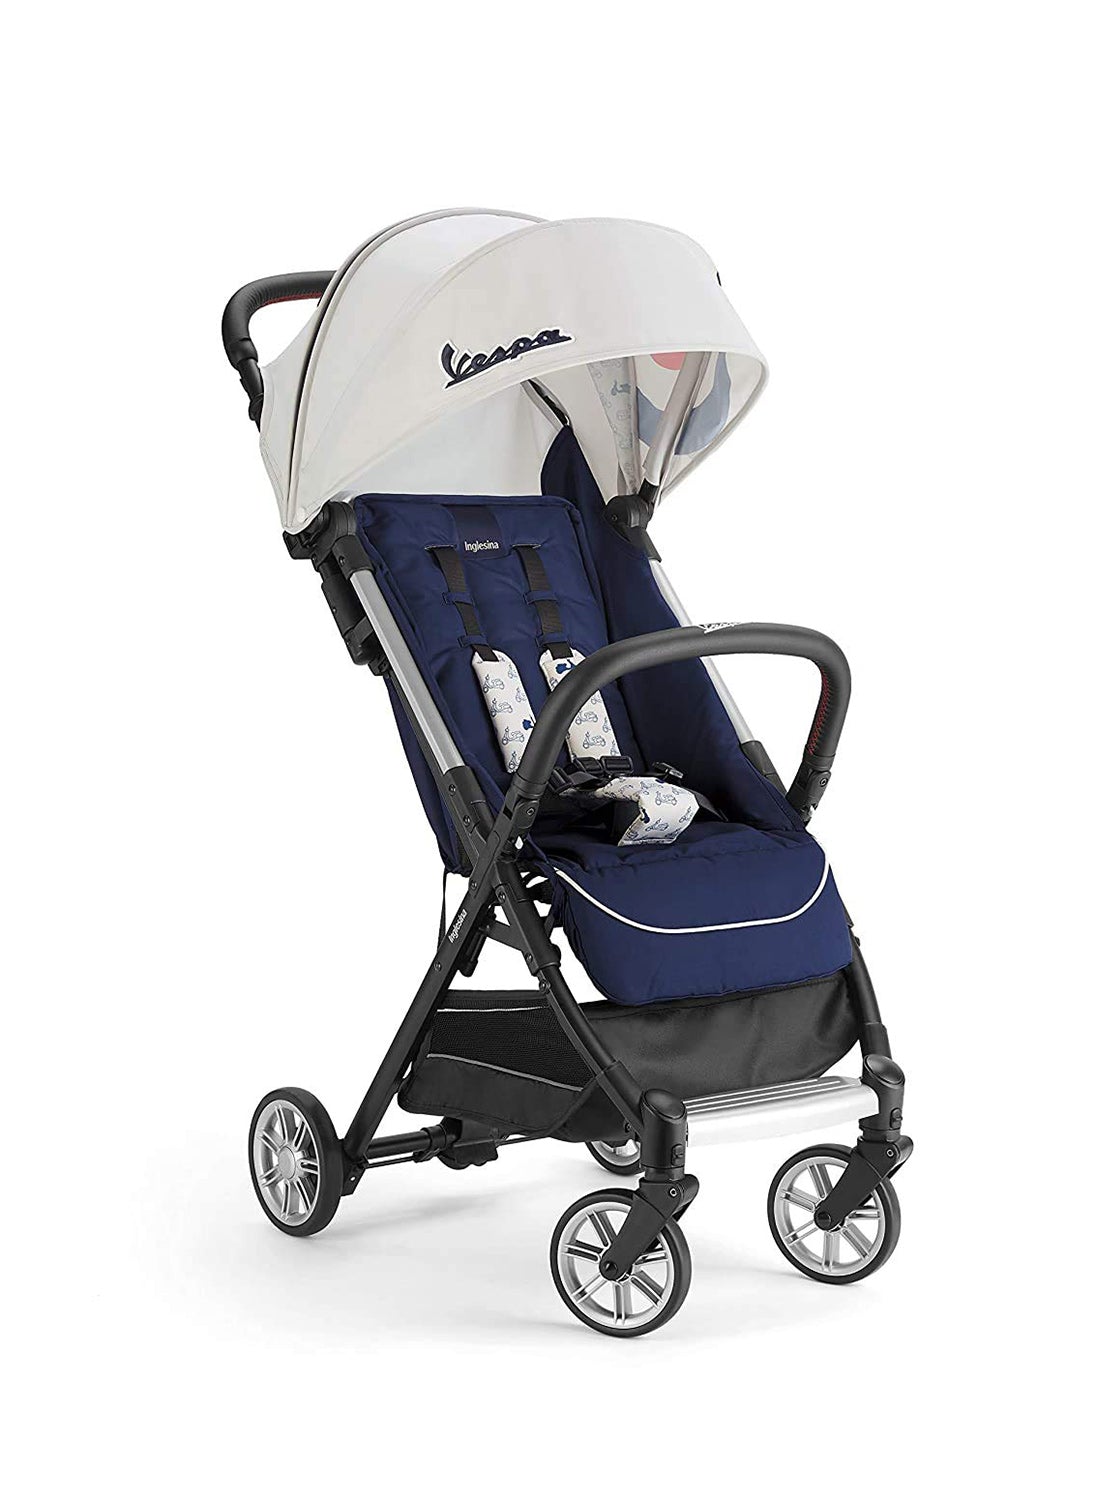 Inglesina Quid Lightweight, Foldable & Compact Baby Stroller - Vespa Blue